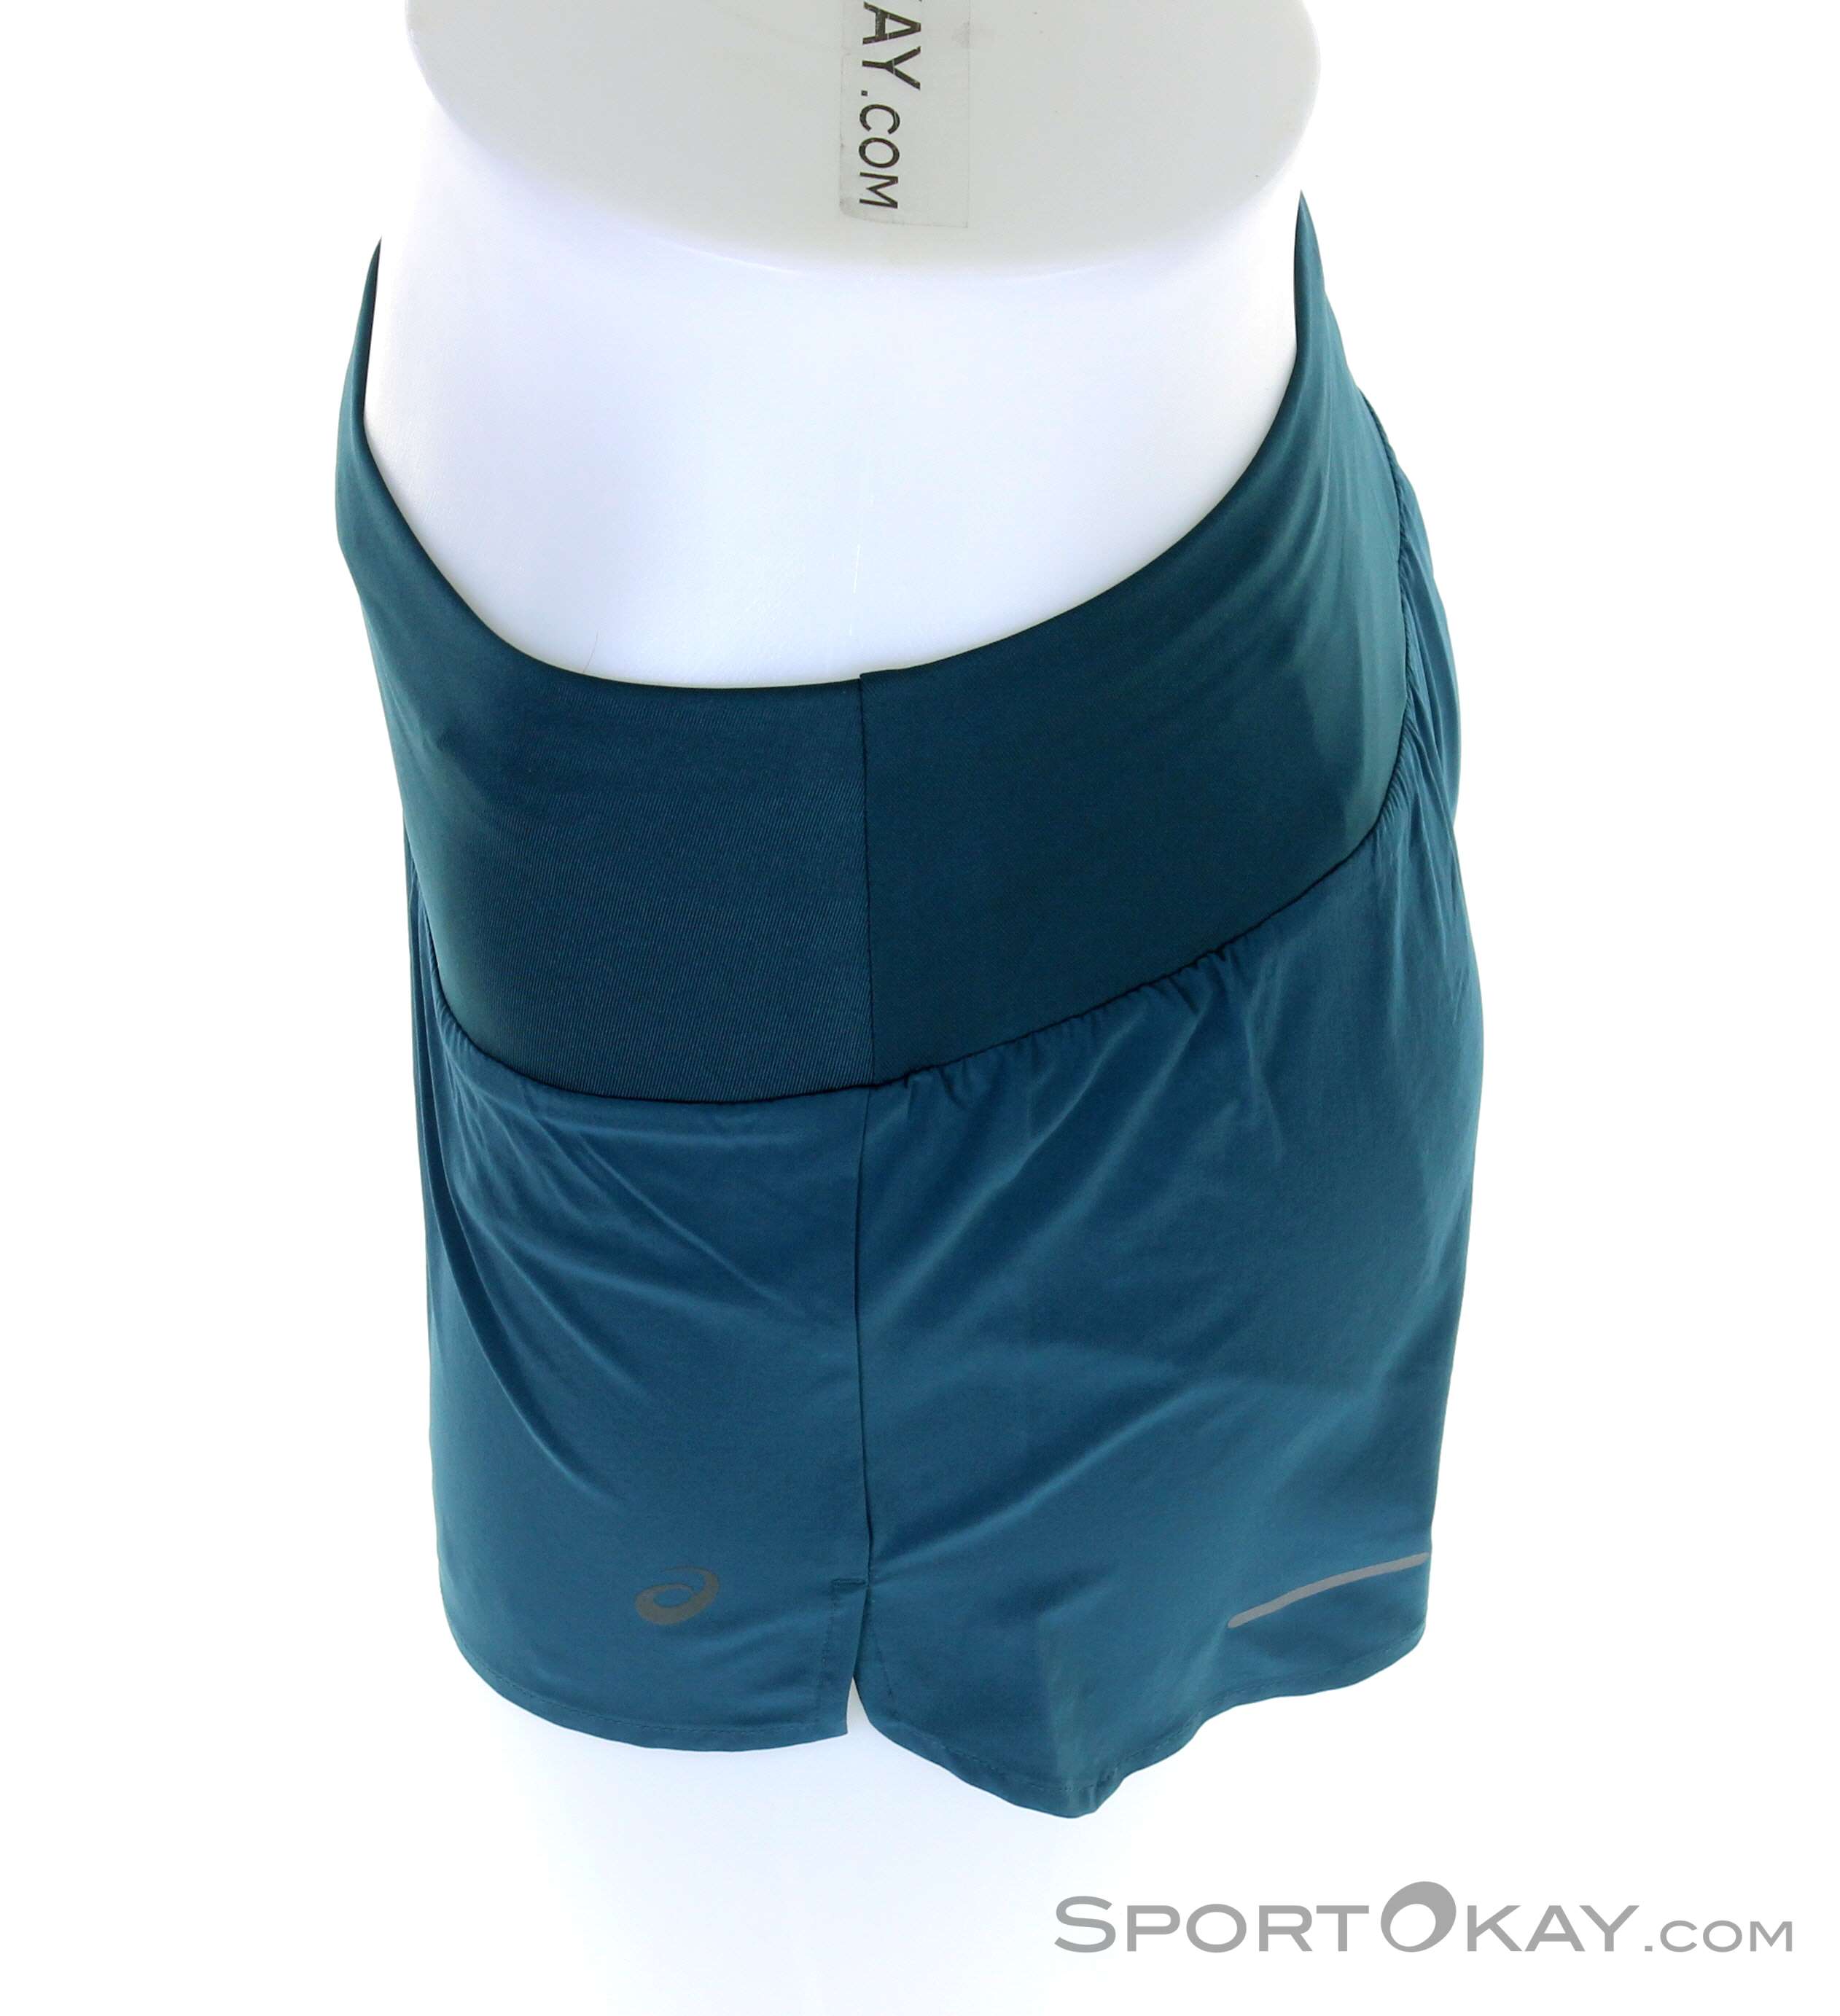 Asics Short in All Women - Shorts Pants Clothing - 3,5 Running Running - - Running Road Asics